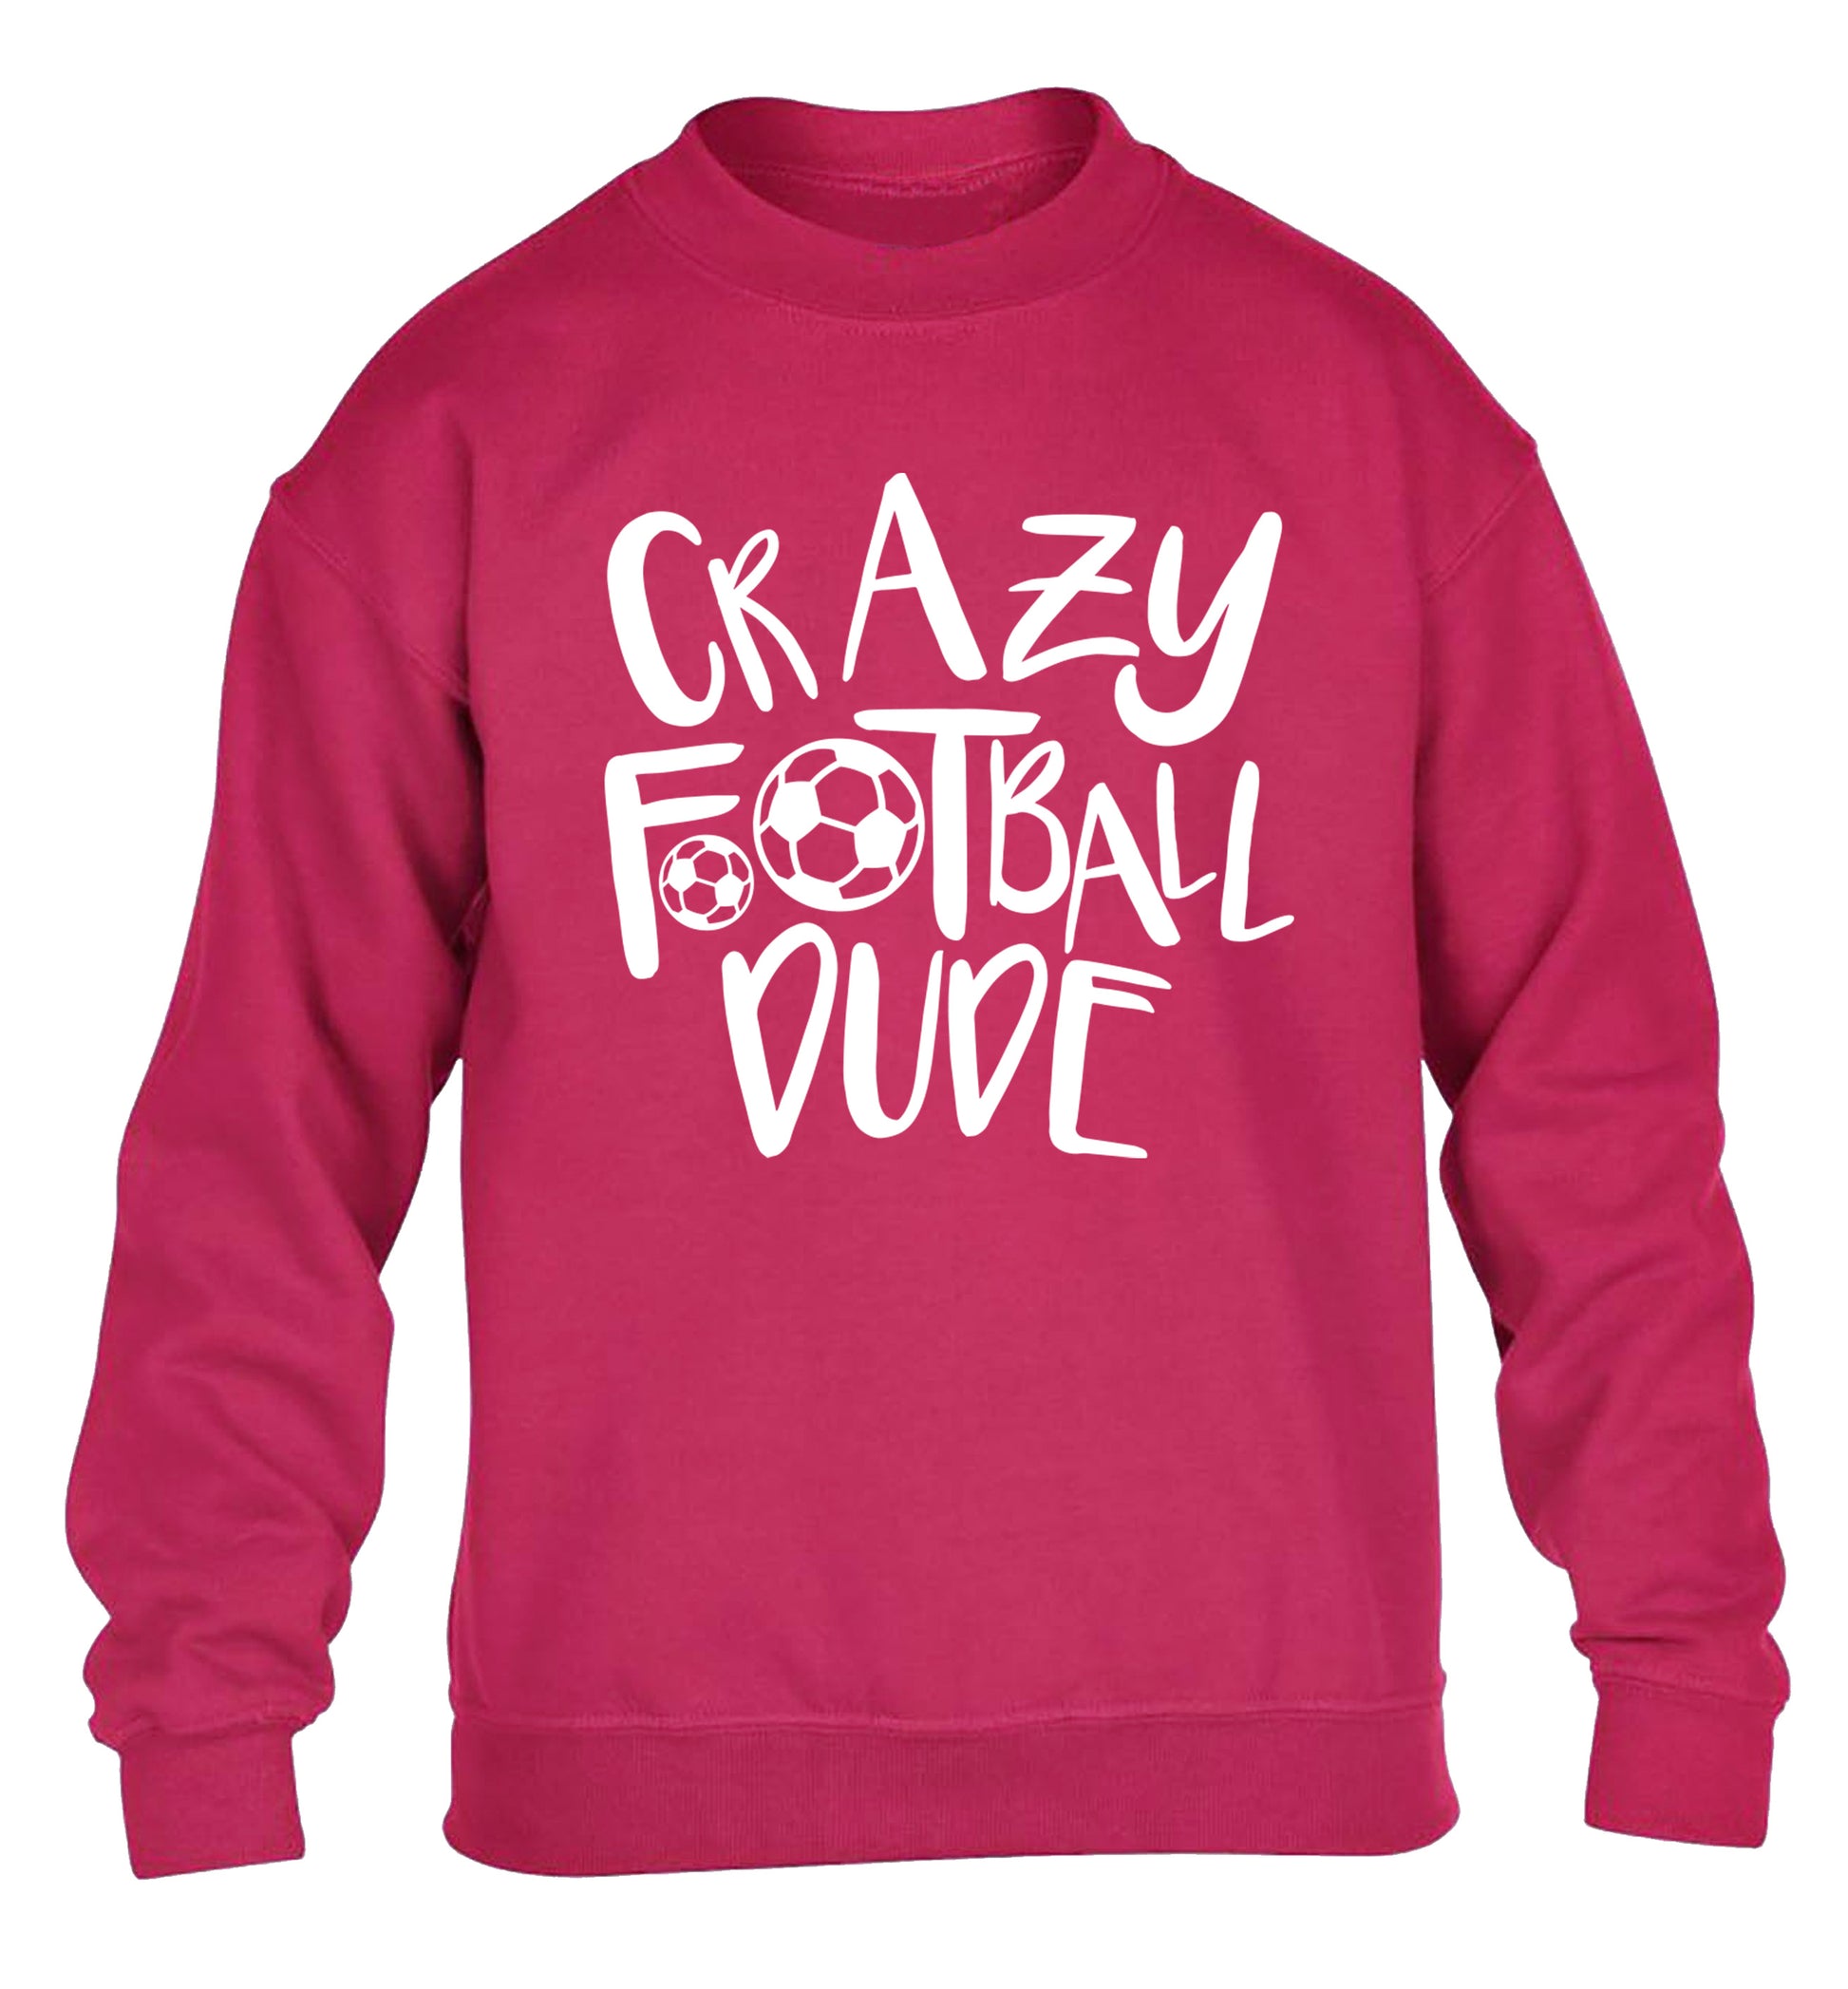 Crazy football dude children's pink sweater 12-14 Years